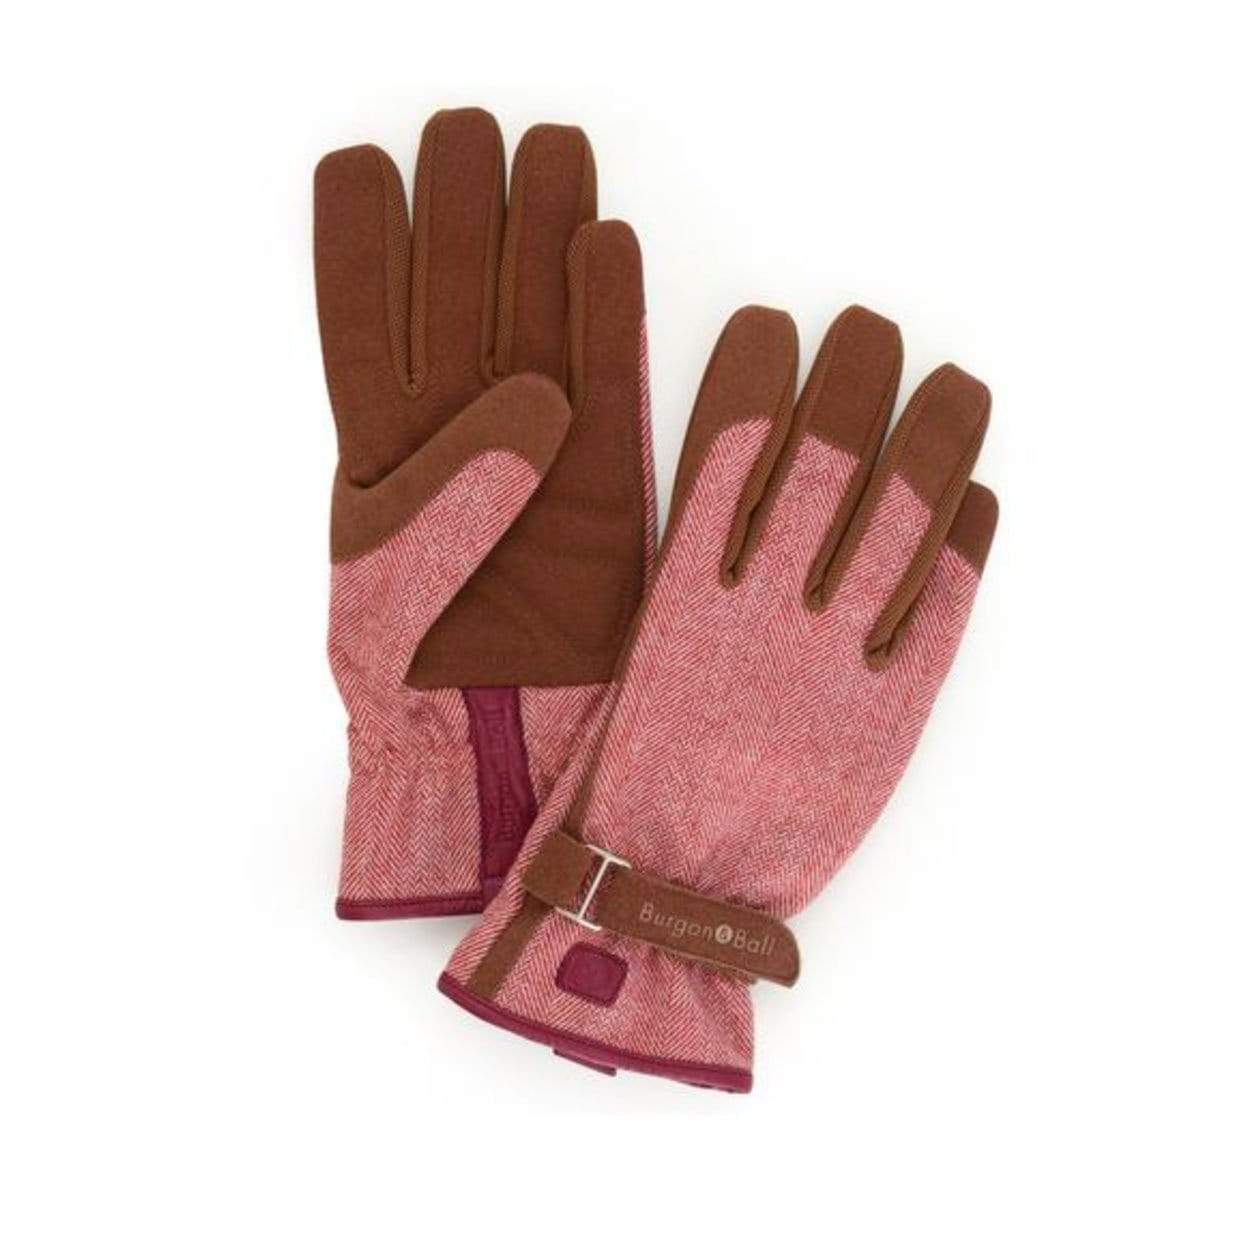 Burgon & Ball Gardening Gloves Gloves Gardening Burgon & Ball The Love Tweed Red